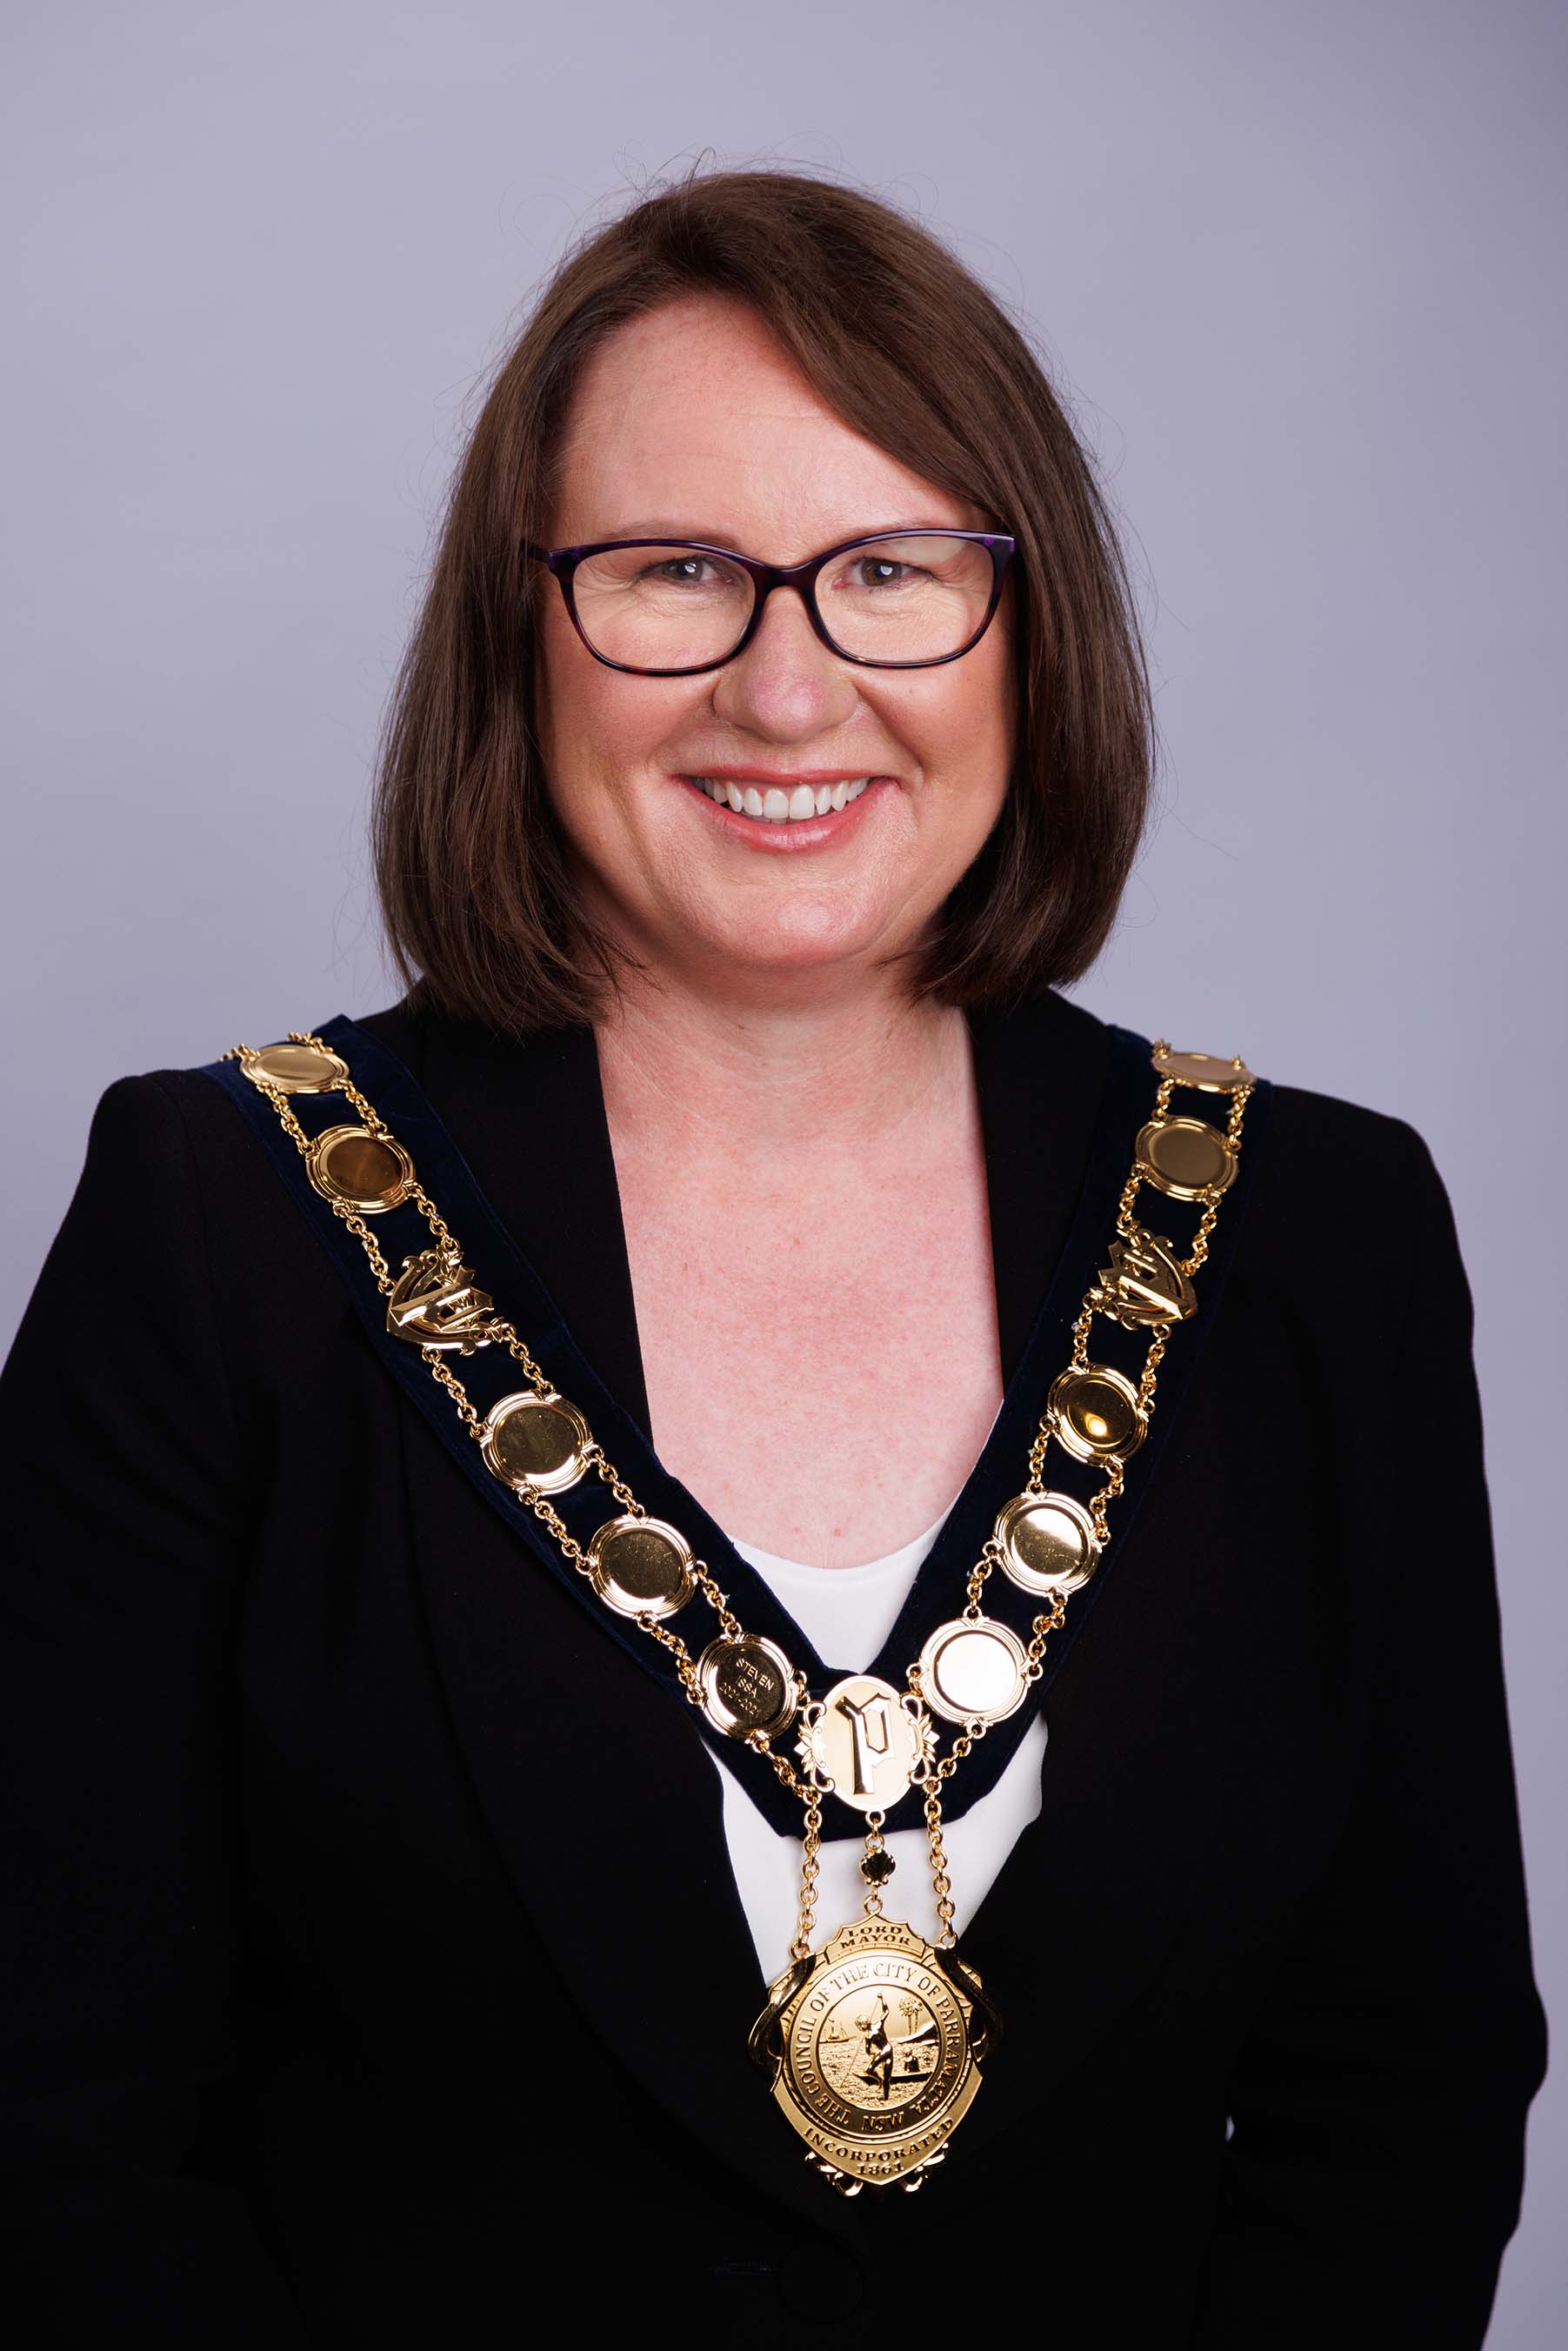 City of Parramatta Lord Mayor Donna Davis